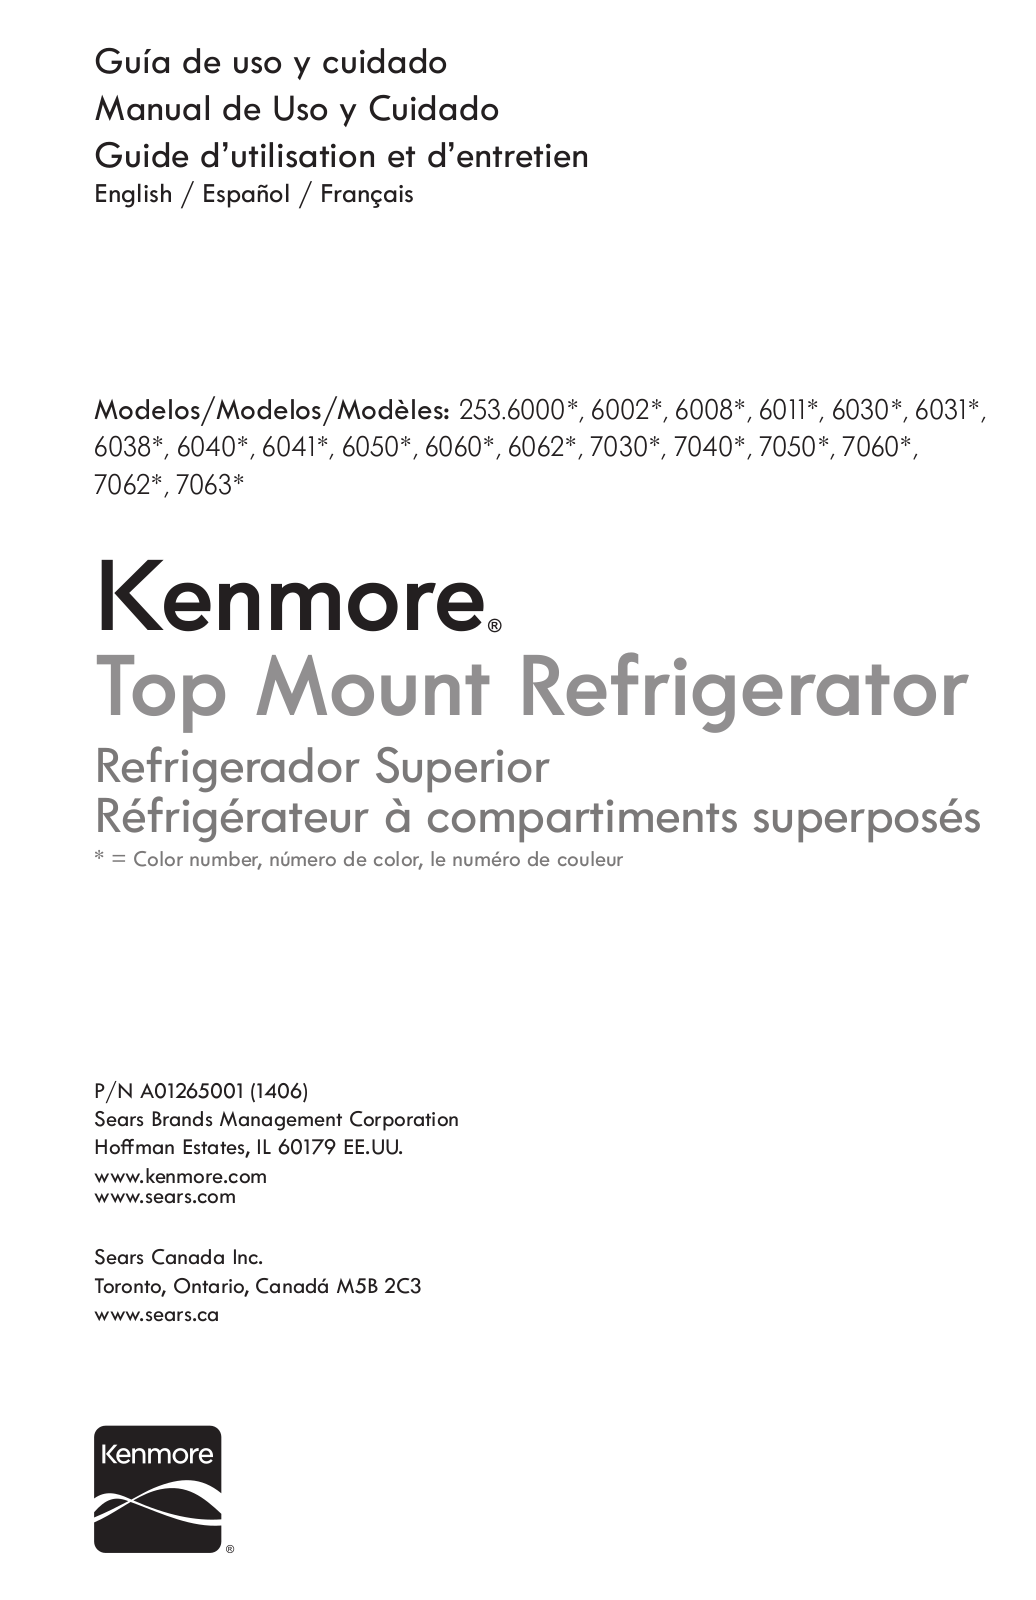 Kenmore 20.4 cu. ft. Top Freezer Refrigerator, 18 cu. ft. Top Mount Refrigerator, 18 cu. ft. Top Freezer Refrigerator, 16 cu. ft. Top Freezer Refrigerator, 15 cu. ft. Top Freezer Refrigerator Owner's Manual